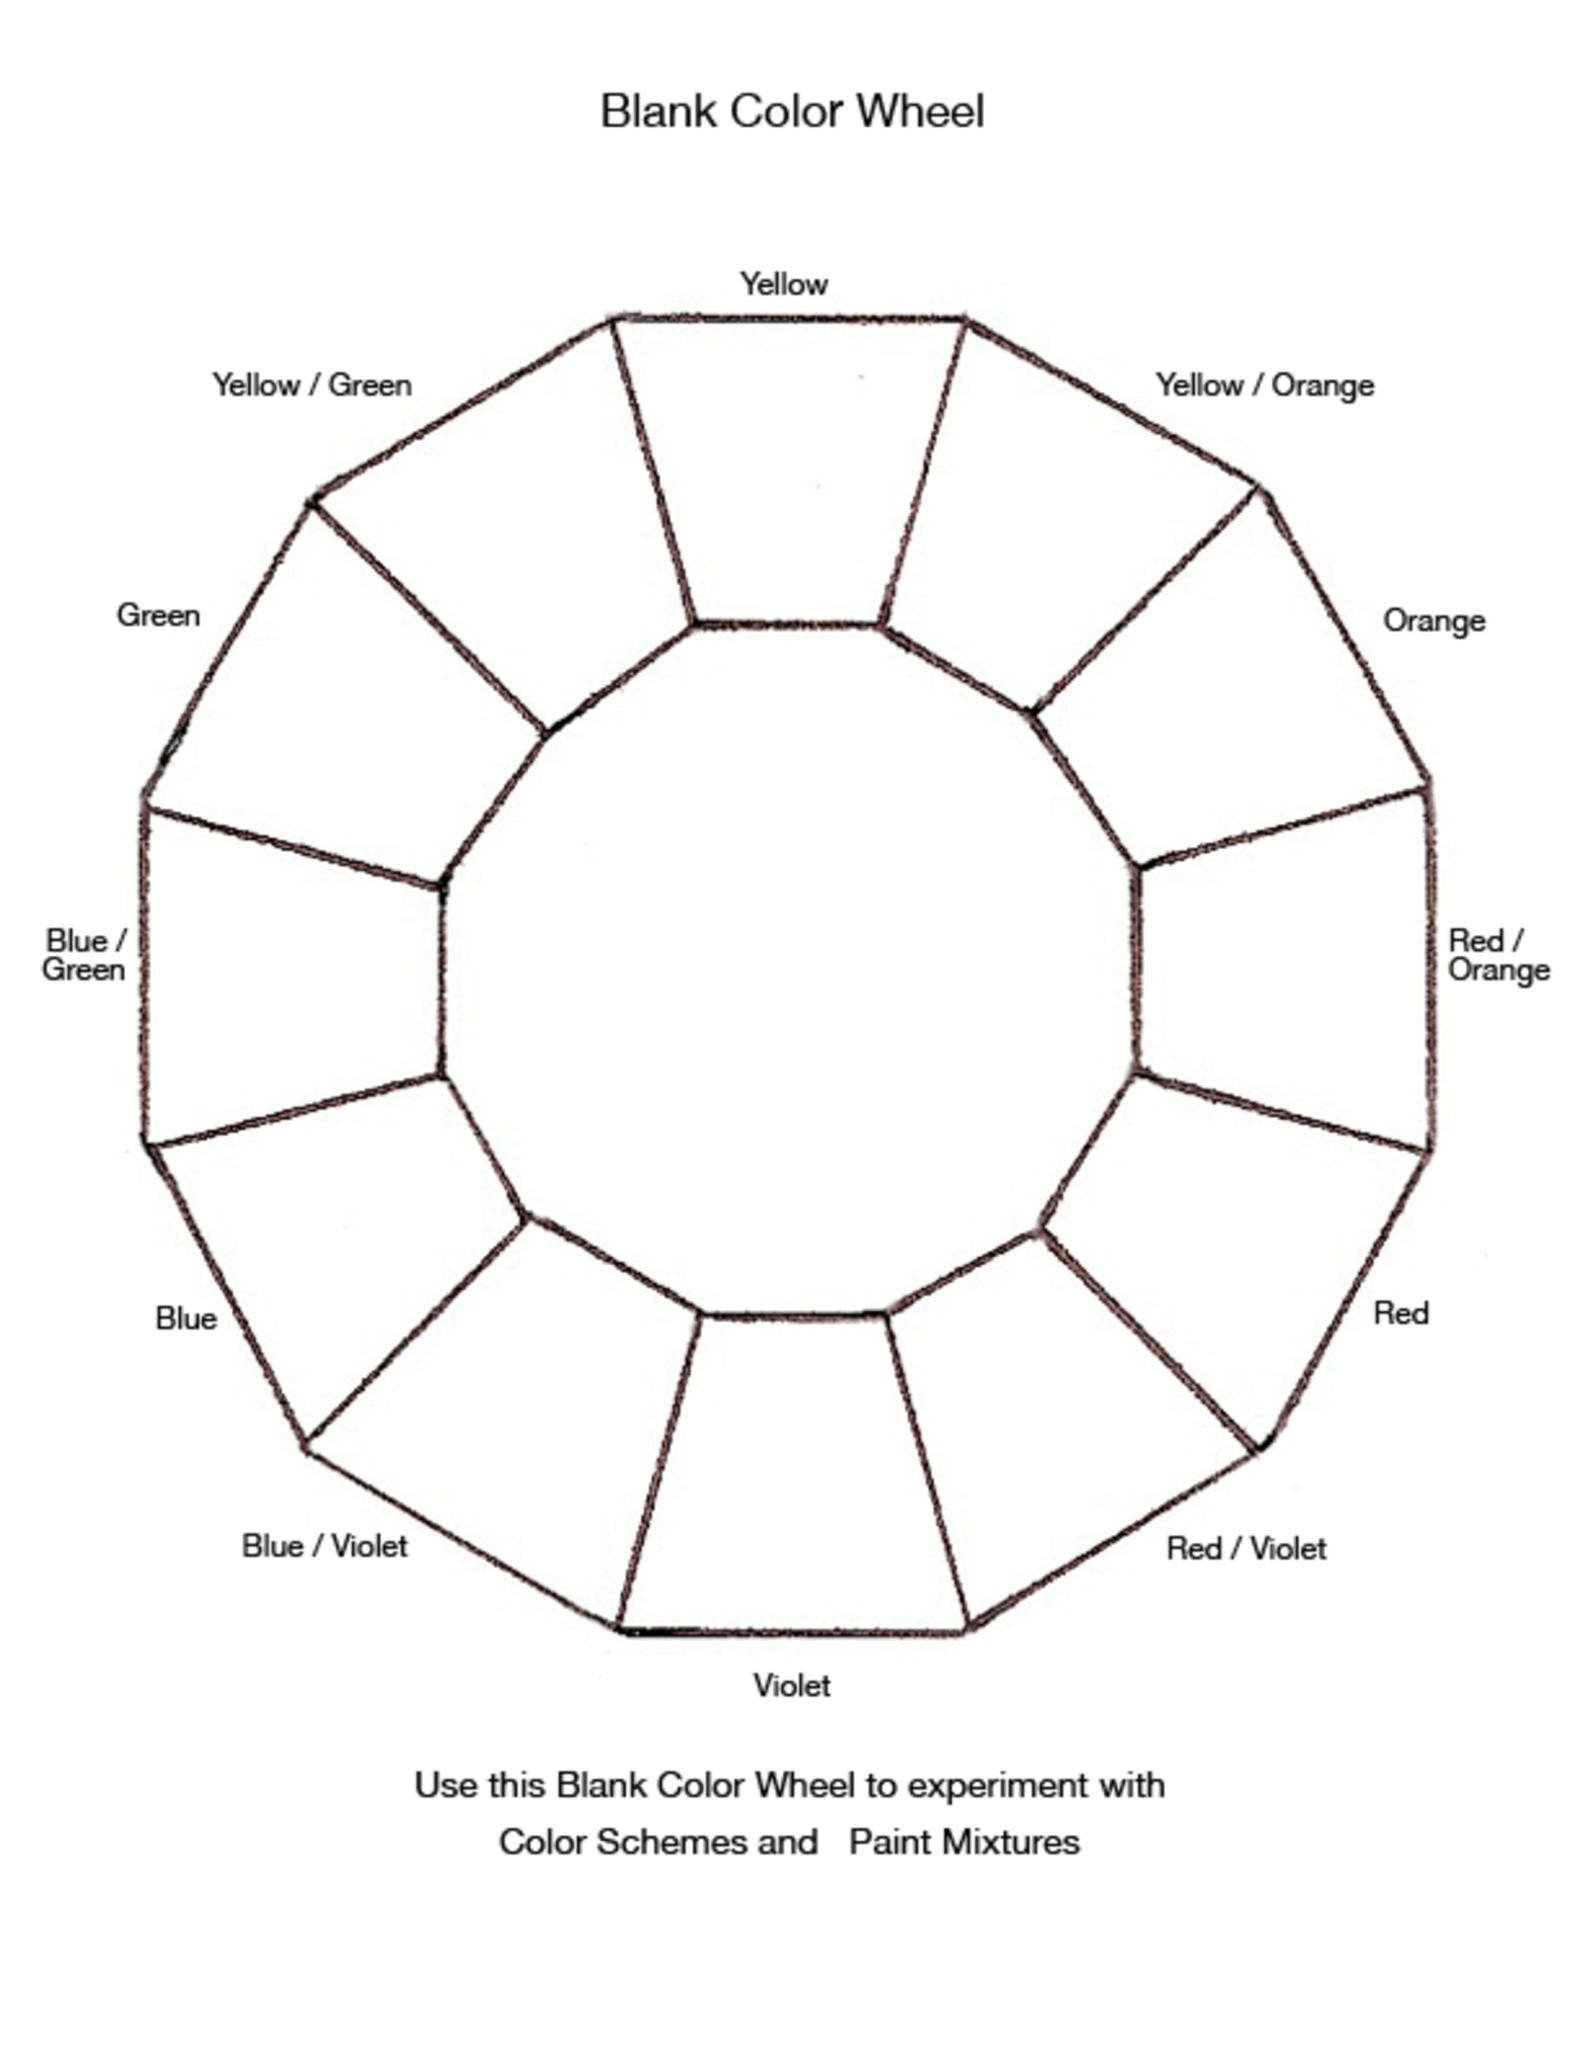 blank-color-wheel-chart-templates-at-allbusinesstemplates-inside-blank-color-wheel-template